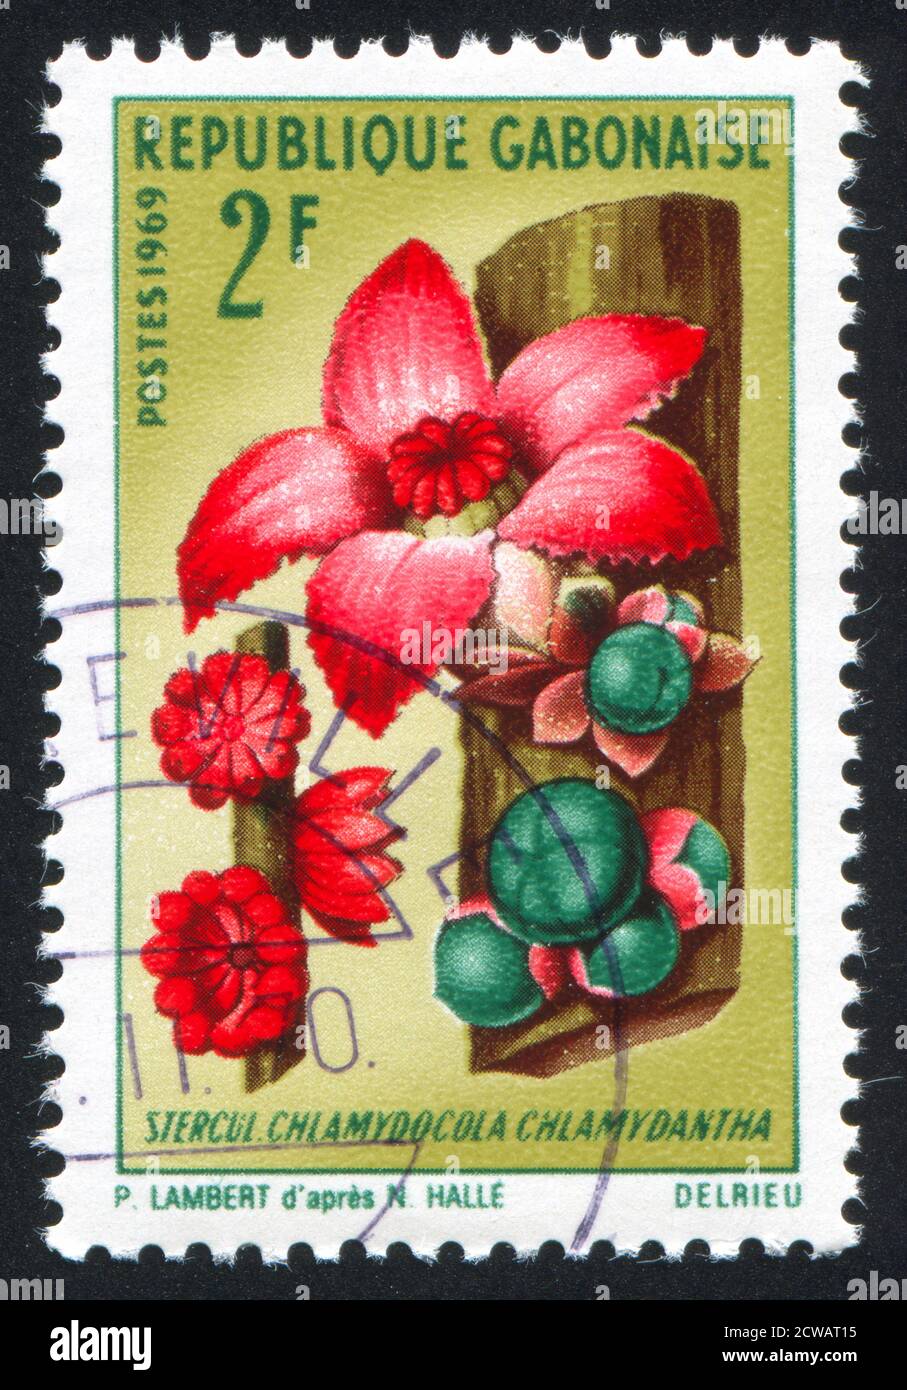 GABON - CIRCA 1969: stamp printed by Gabon, shows Chlamydocola chlamydantha, circa 1969 Stock Photo